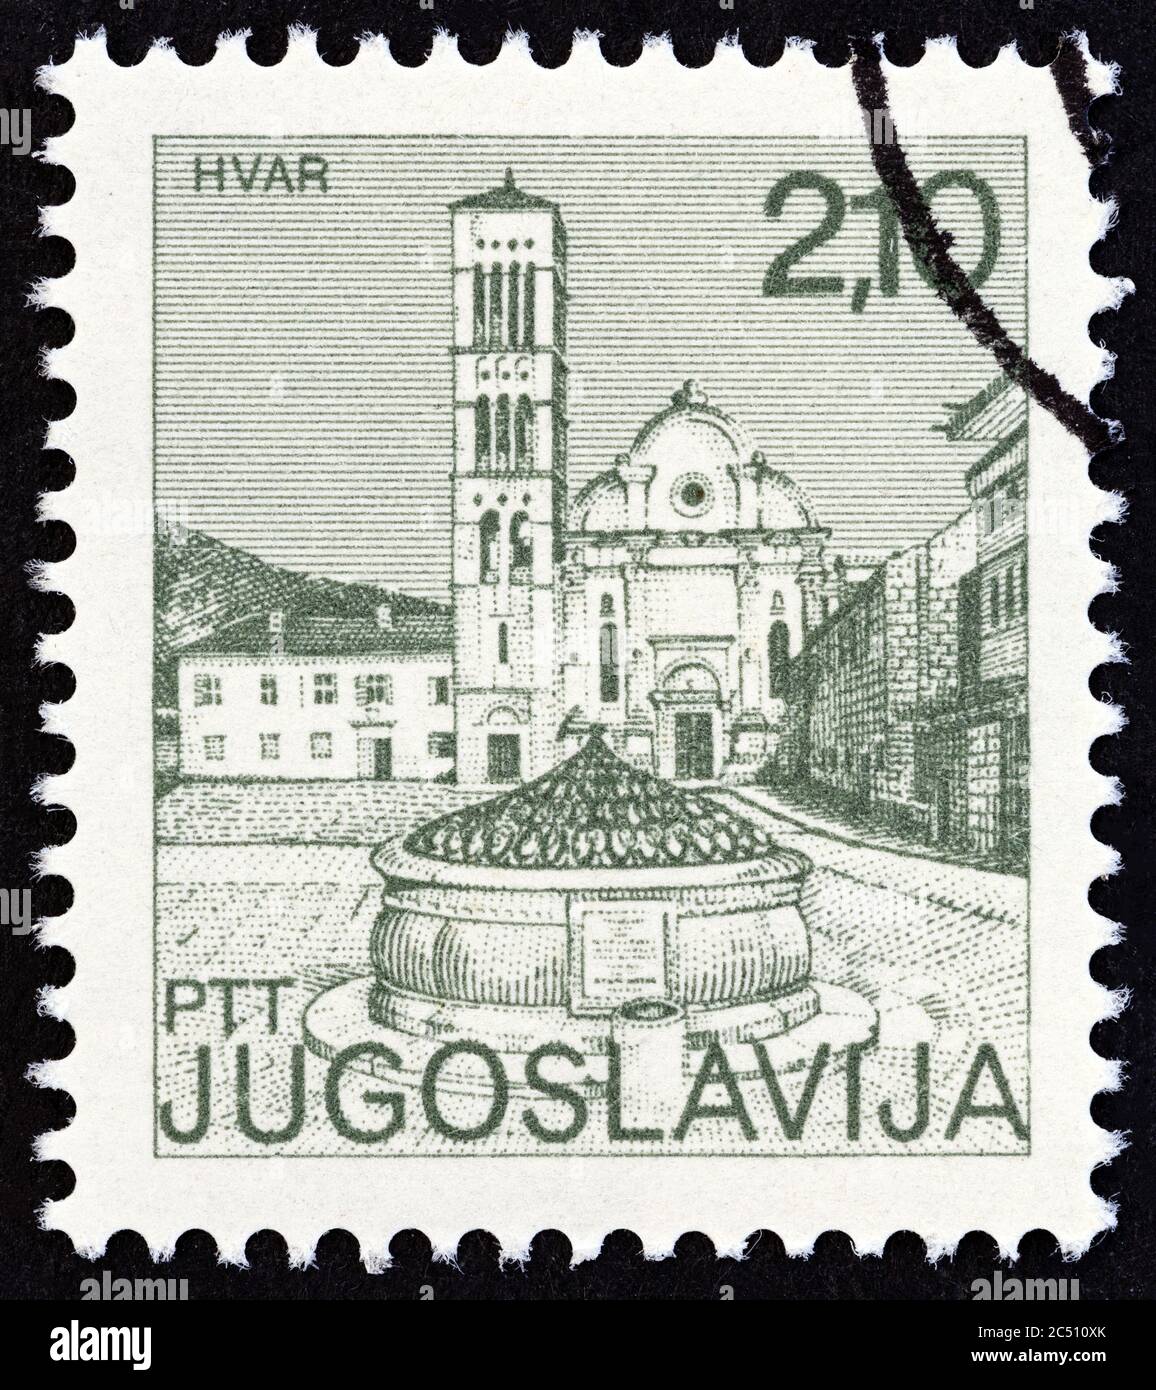 YUGOSLAVIA - CIRCA 1975: A stamp printed in Yugoslavia shows Hvar, Croatia, circa 1975. Stock Photo